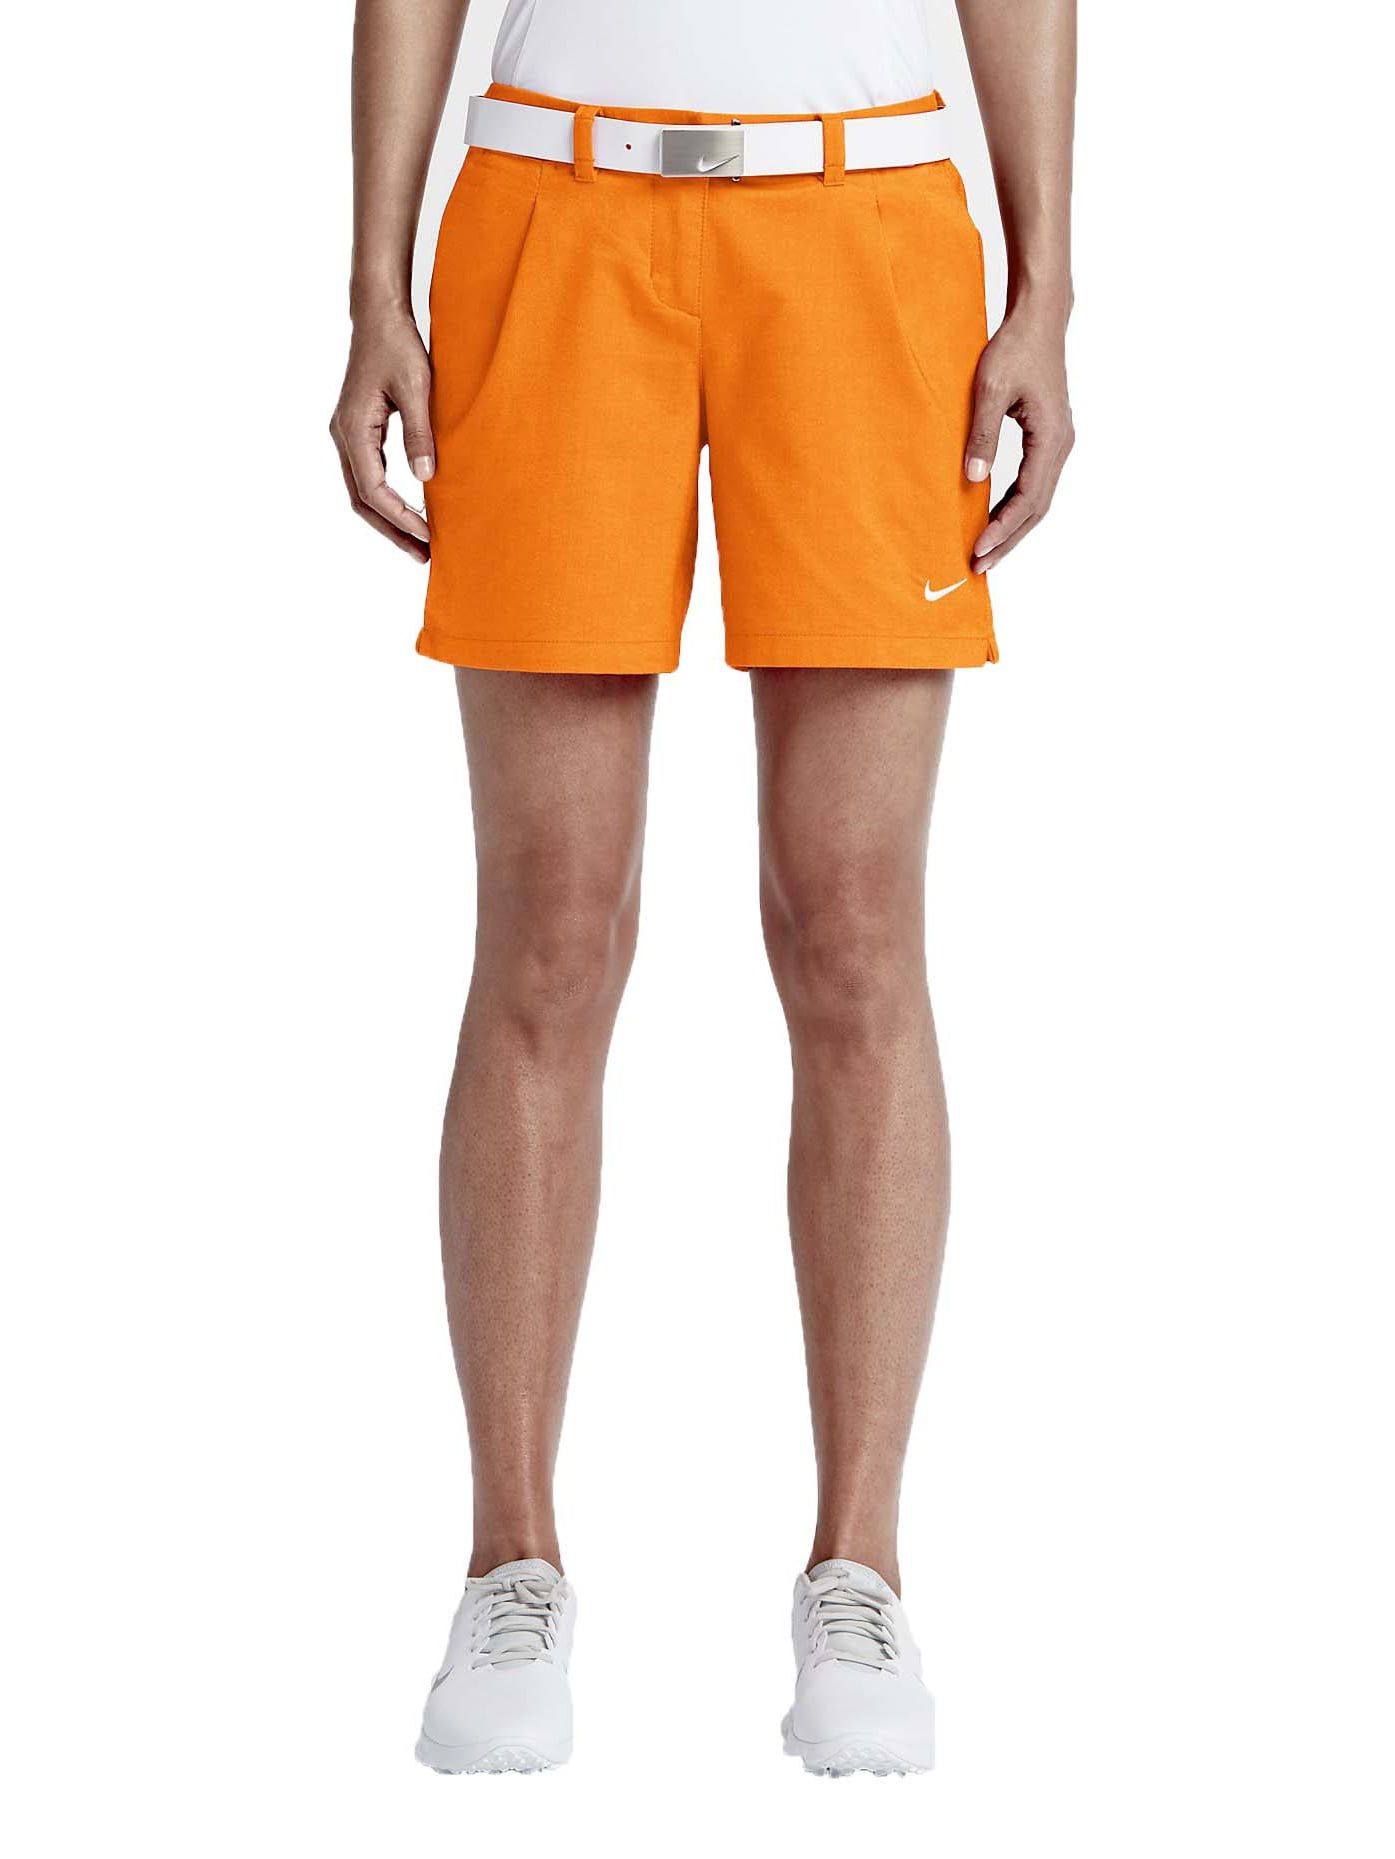 Mucama tolerancia tienda Nike Women's Dri-Fit Oxford Golf Shorts-Orange - Walmart.com